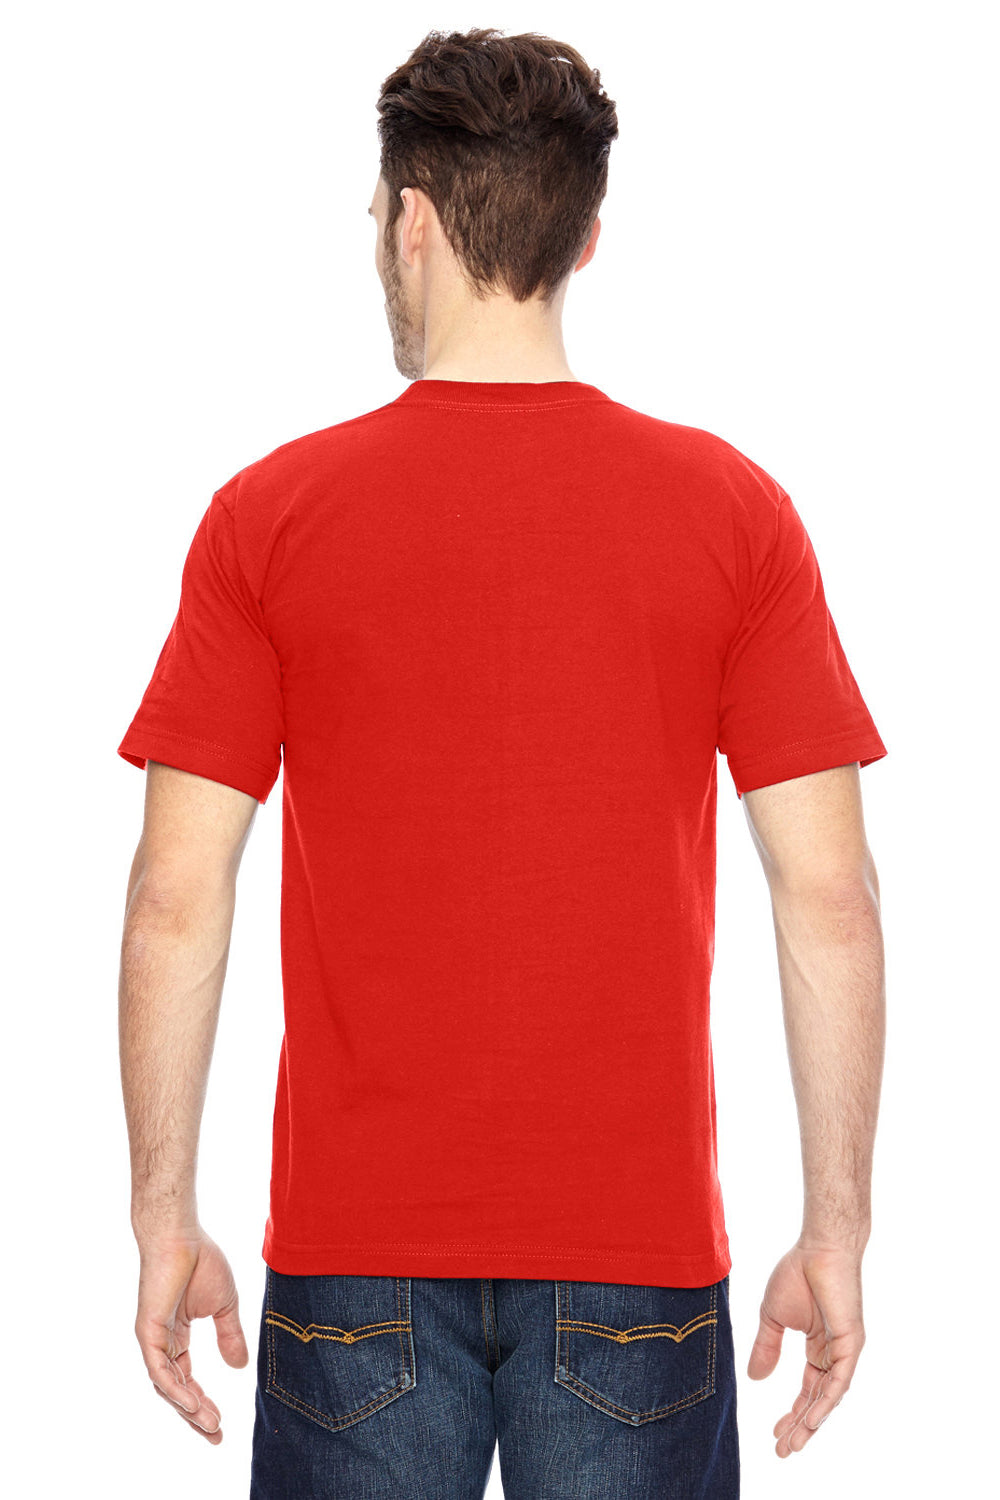 Bayside BA7100 Mens USA Made Short Sleeve Crewneck T-Shirt w/ Pocket Bright Orange Model Side